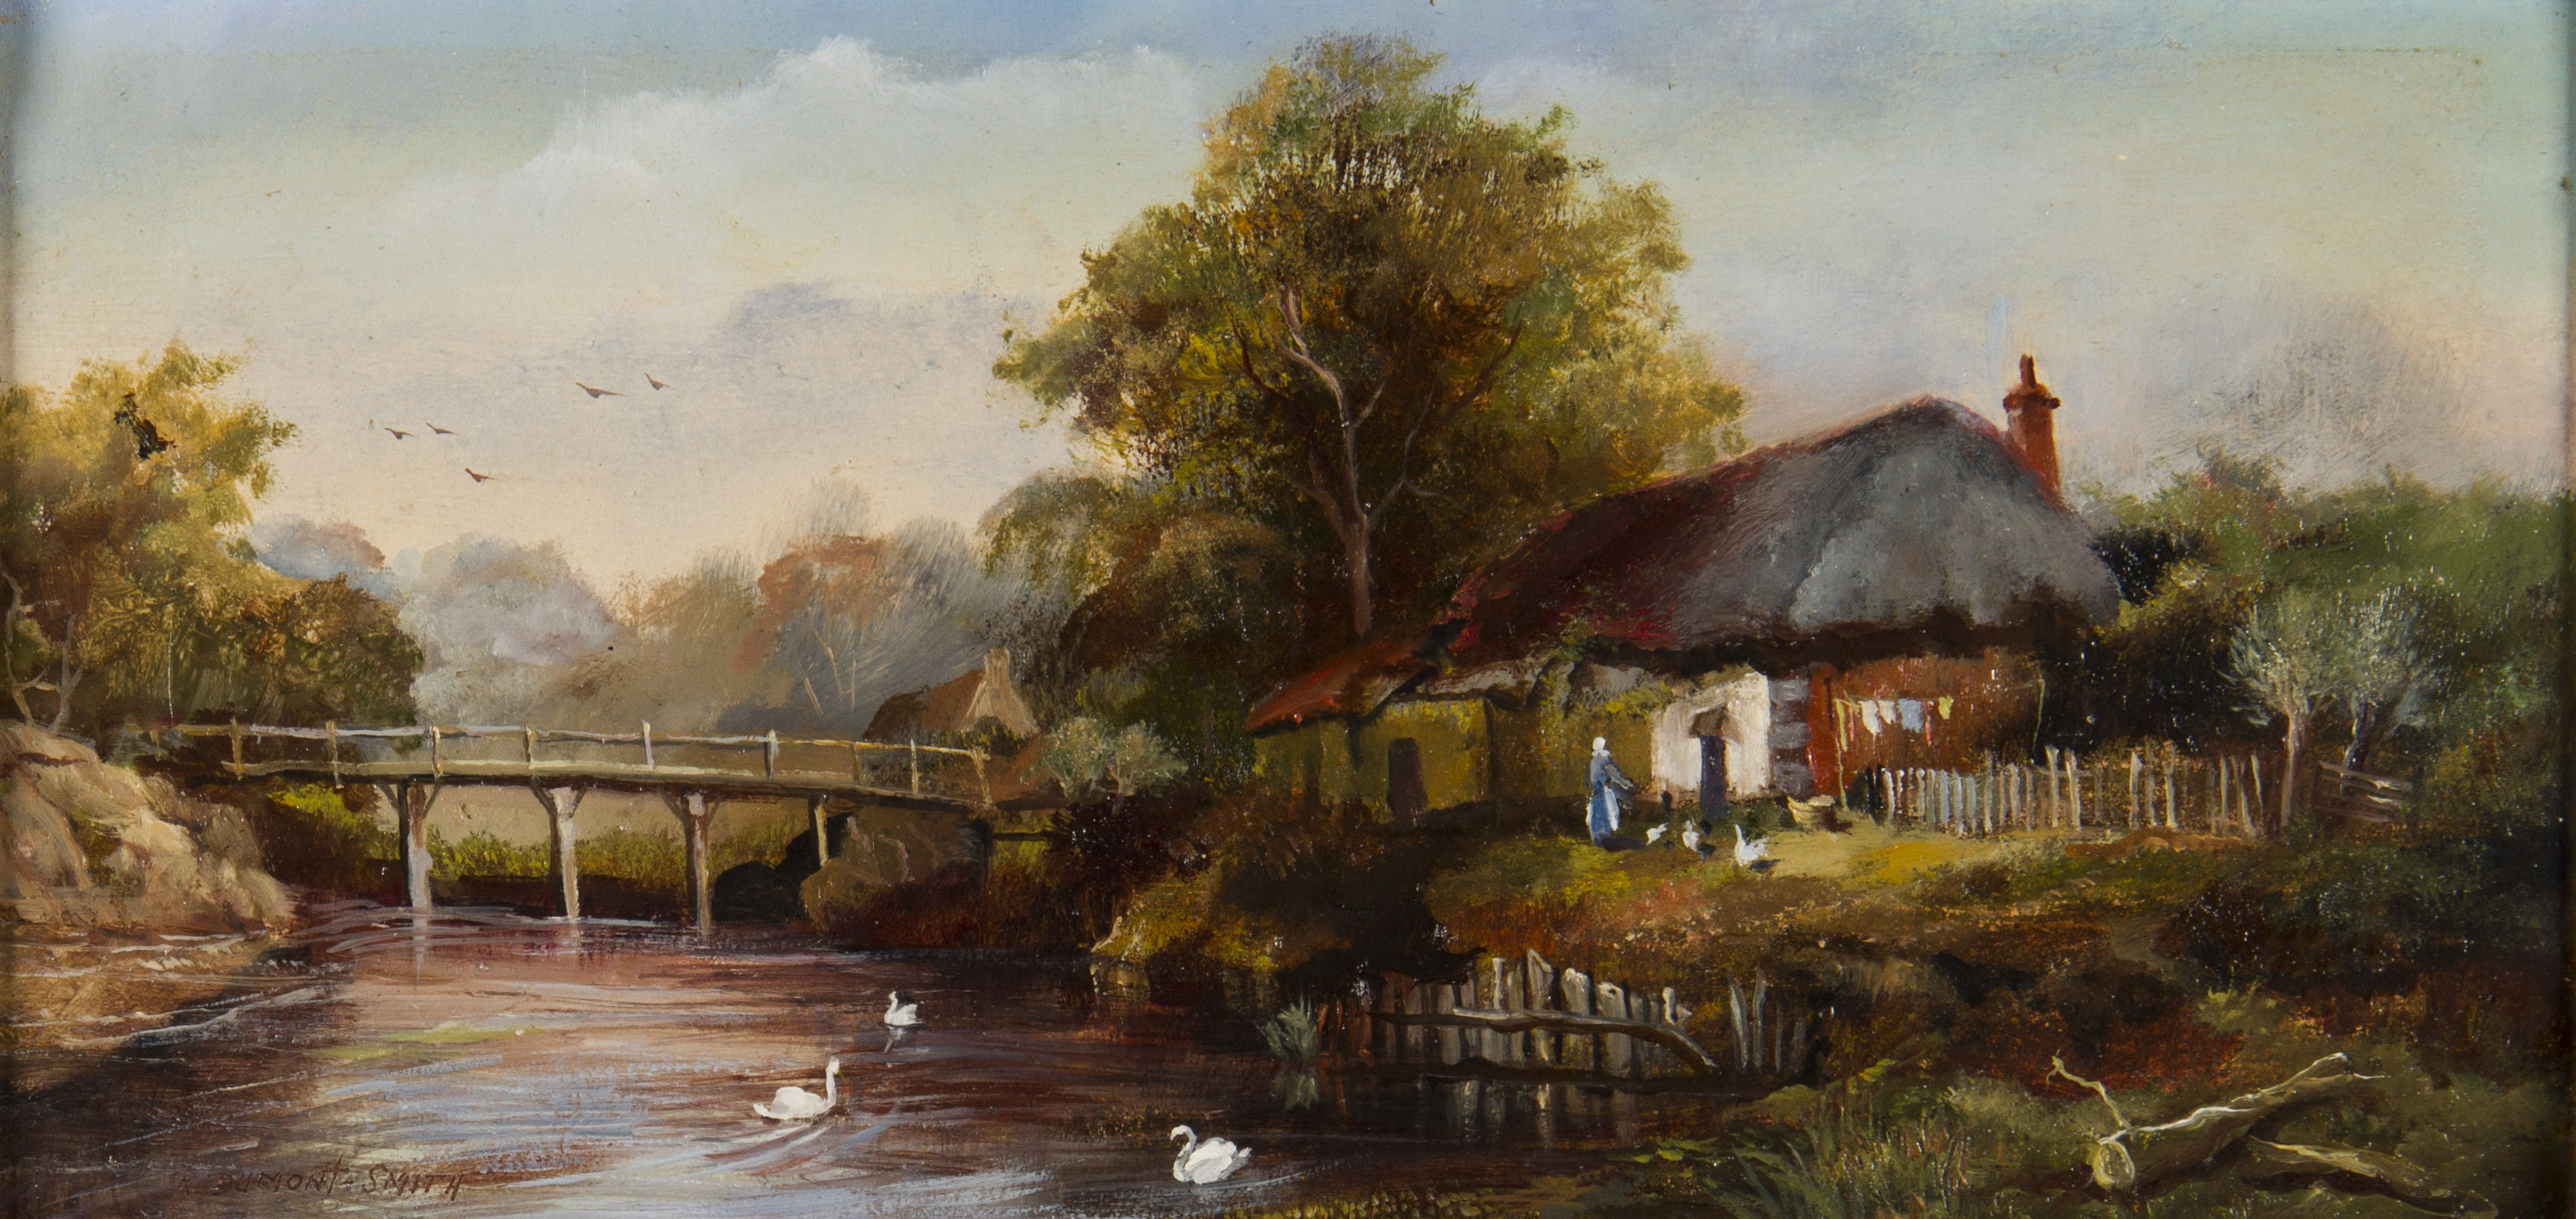 ROBERT DUMONT- SMITH (c. 1908 -) Two framed, signed, oils on board, one rural village river scene - Image 2 of 4